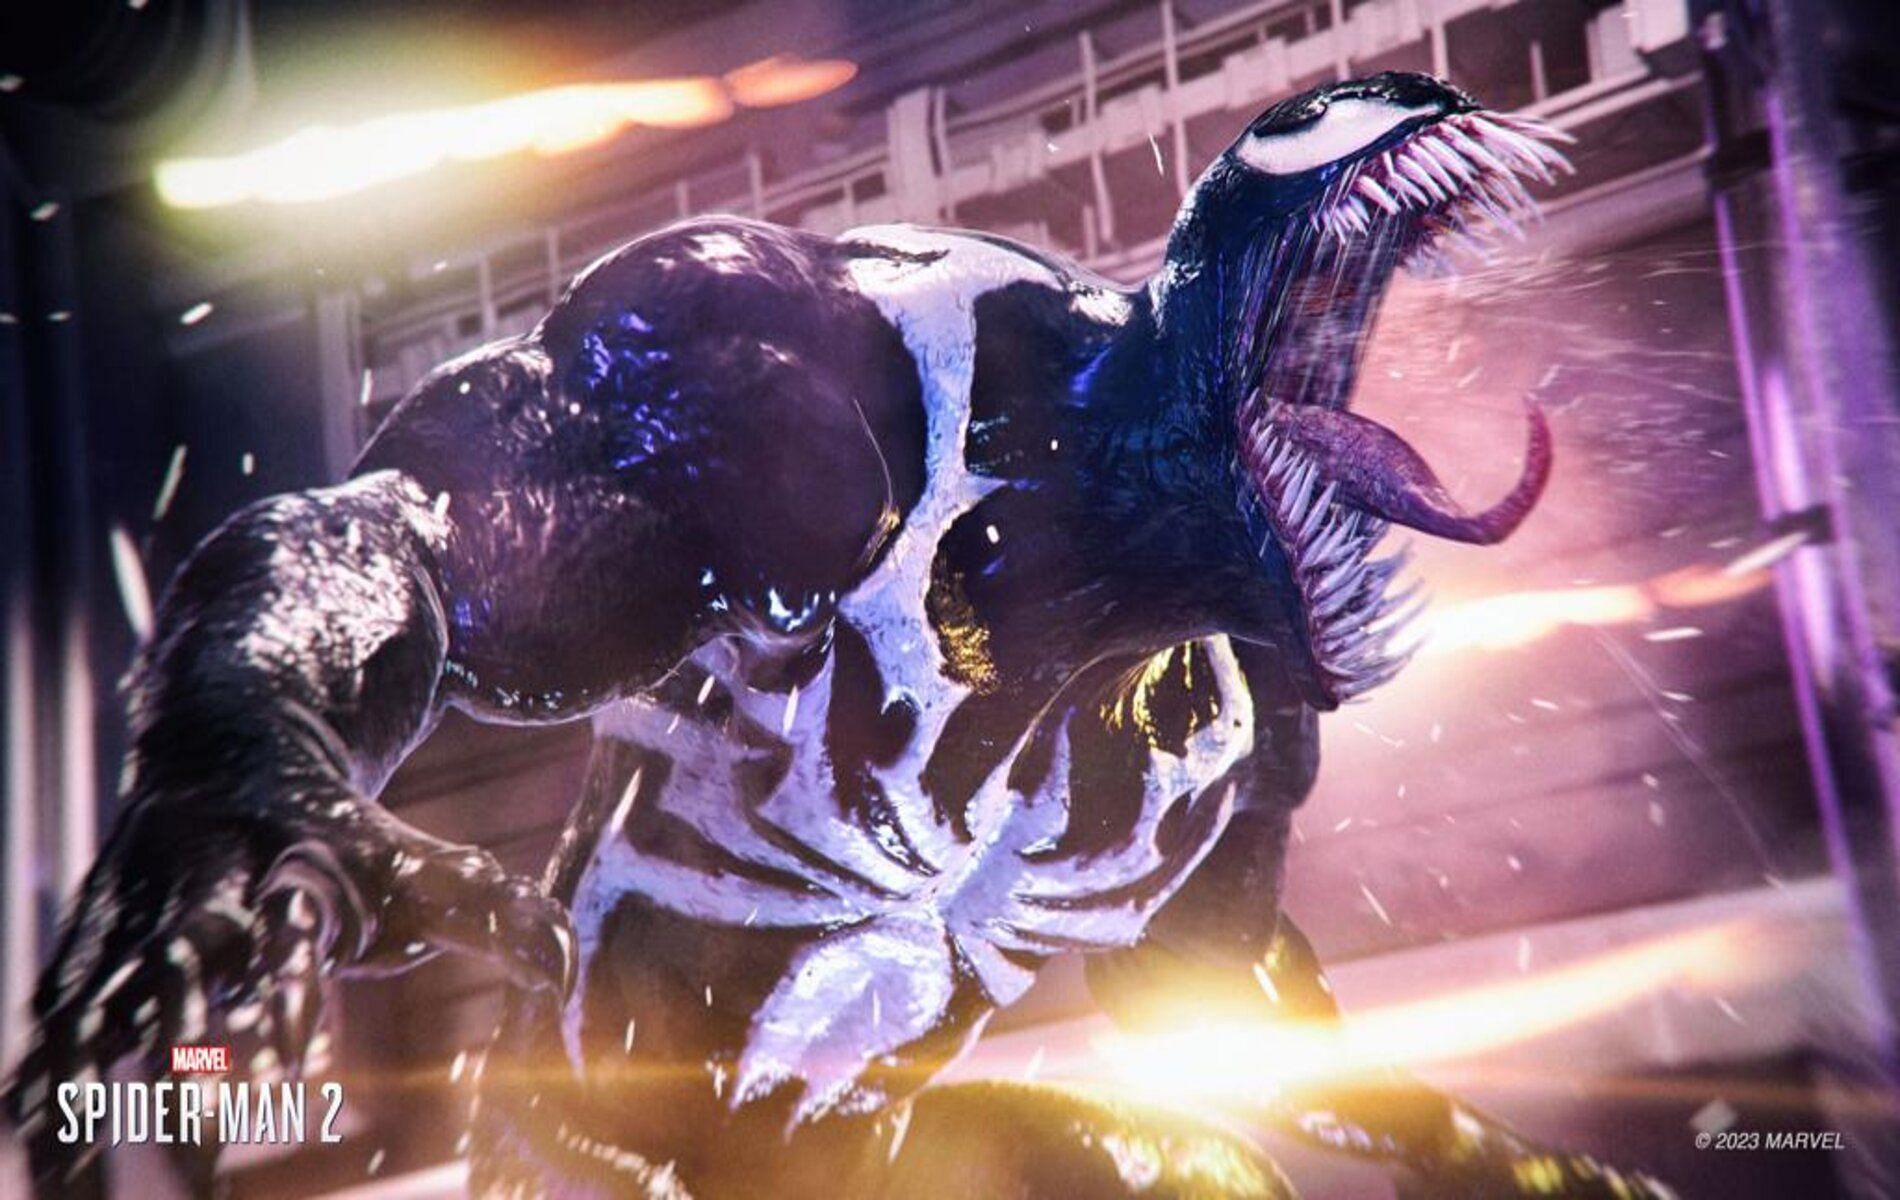 Screenshot from Spider-Man 2 video game showcasing Venom